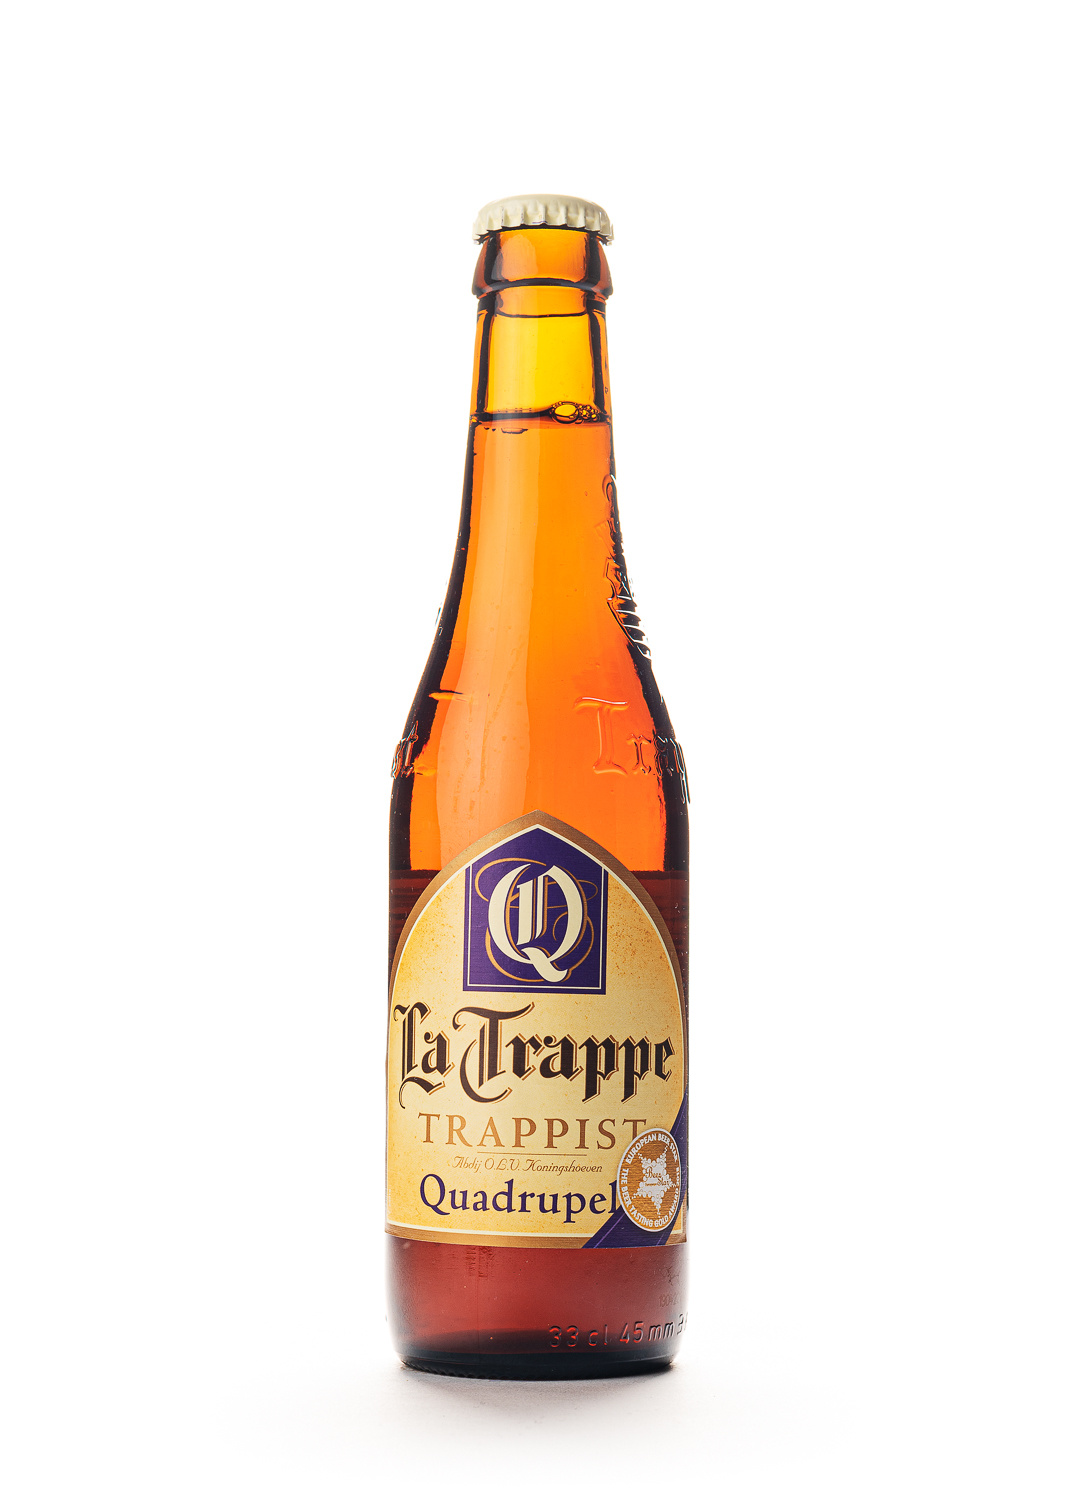 Ла трапп. Квадрюпель la Trappe. Пиво la Trappe Quadrupel. Ла Траппе пиво квадрюпель 0,33. Ла Траппе Витте Траппист 0.33.